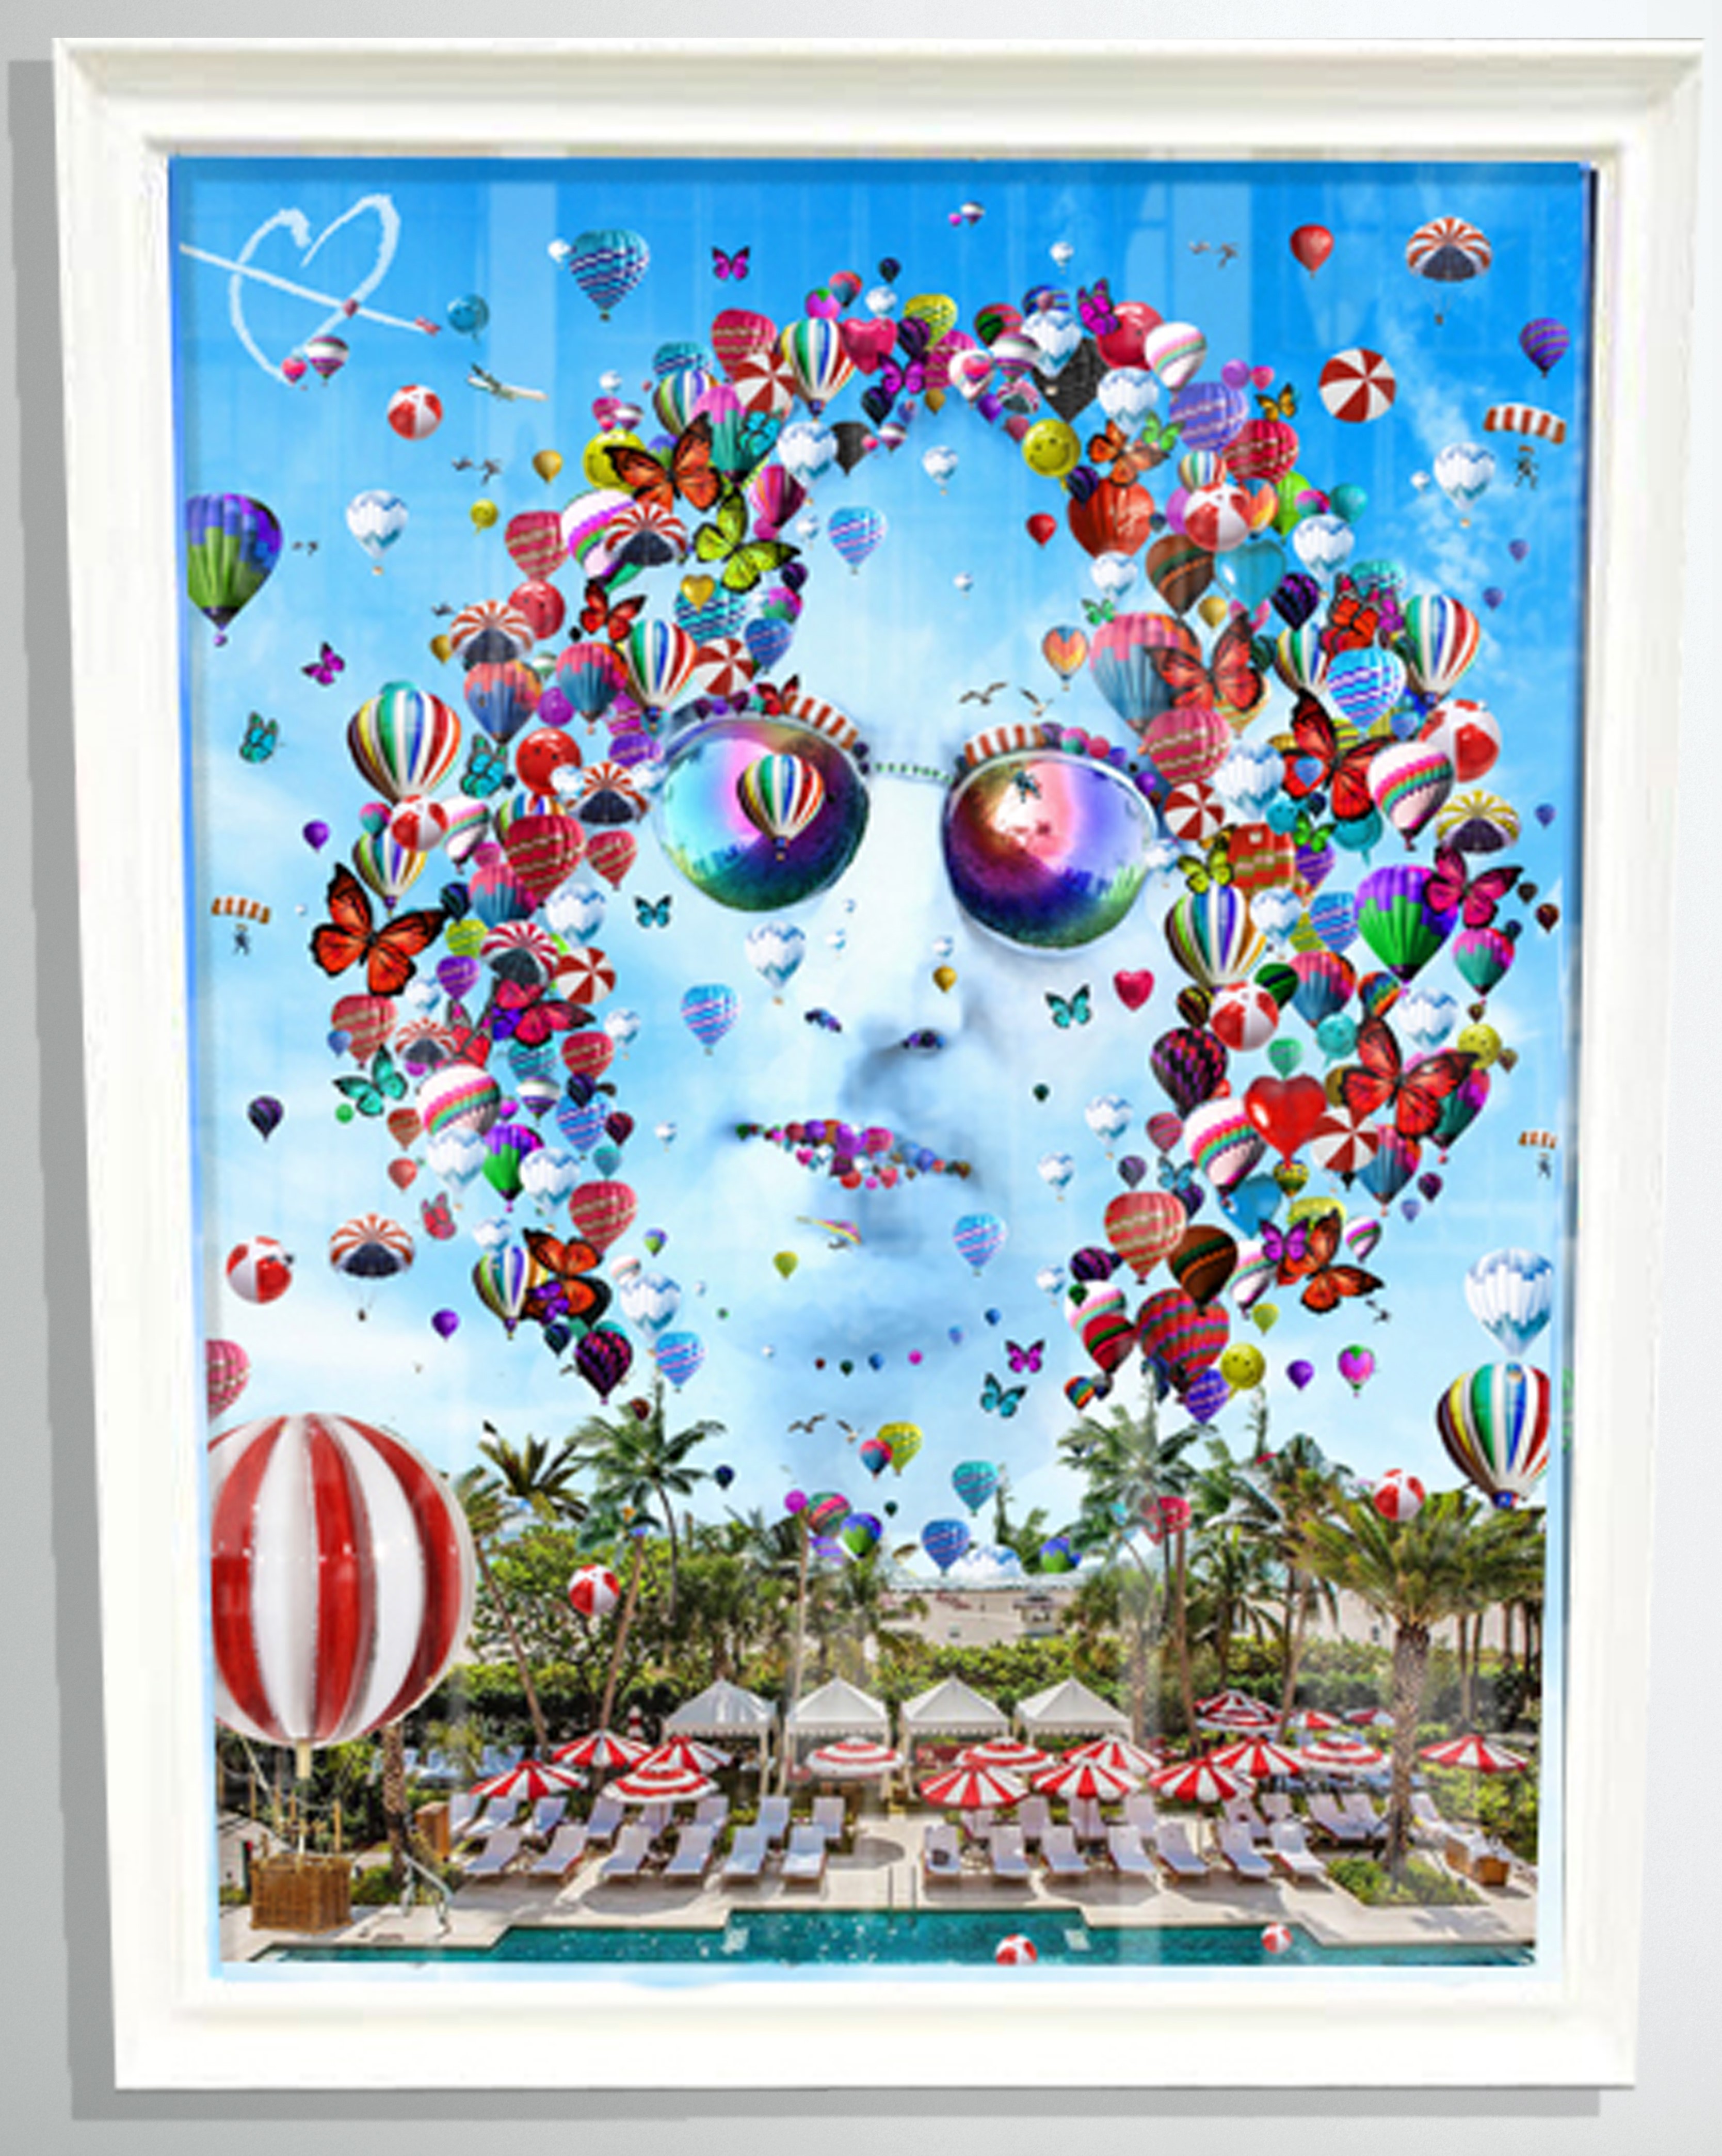 Lennon Balloons by Iain Alexander | Mixed Media Original on Aluminum in Resin